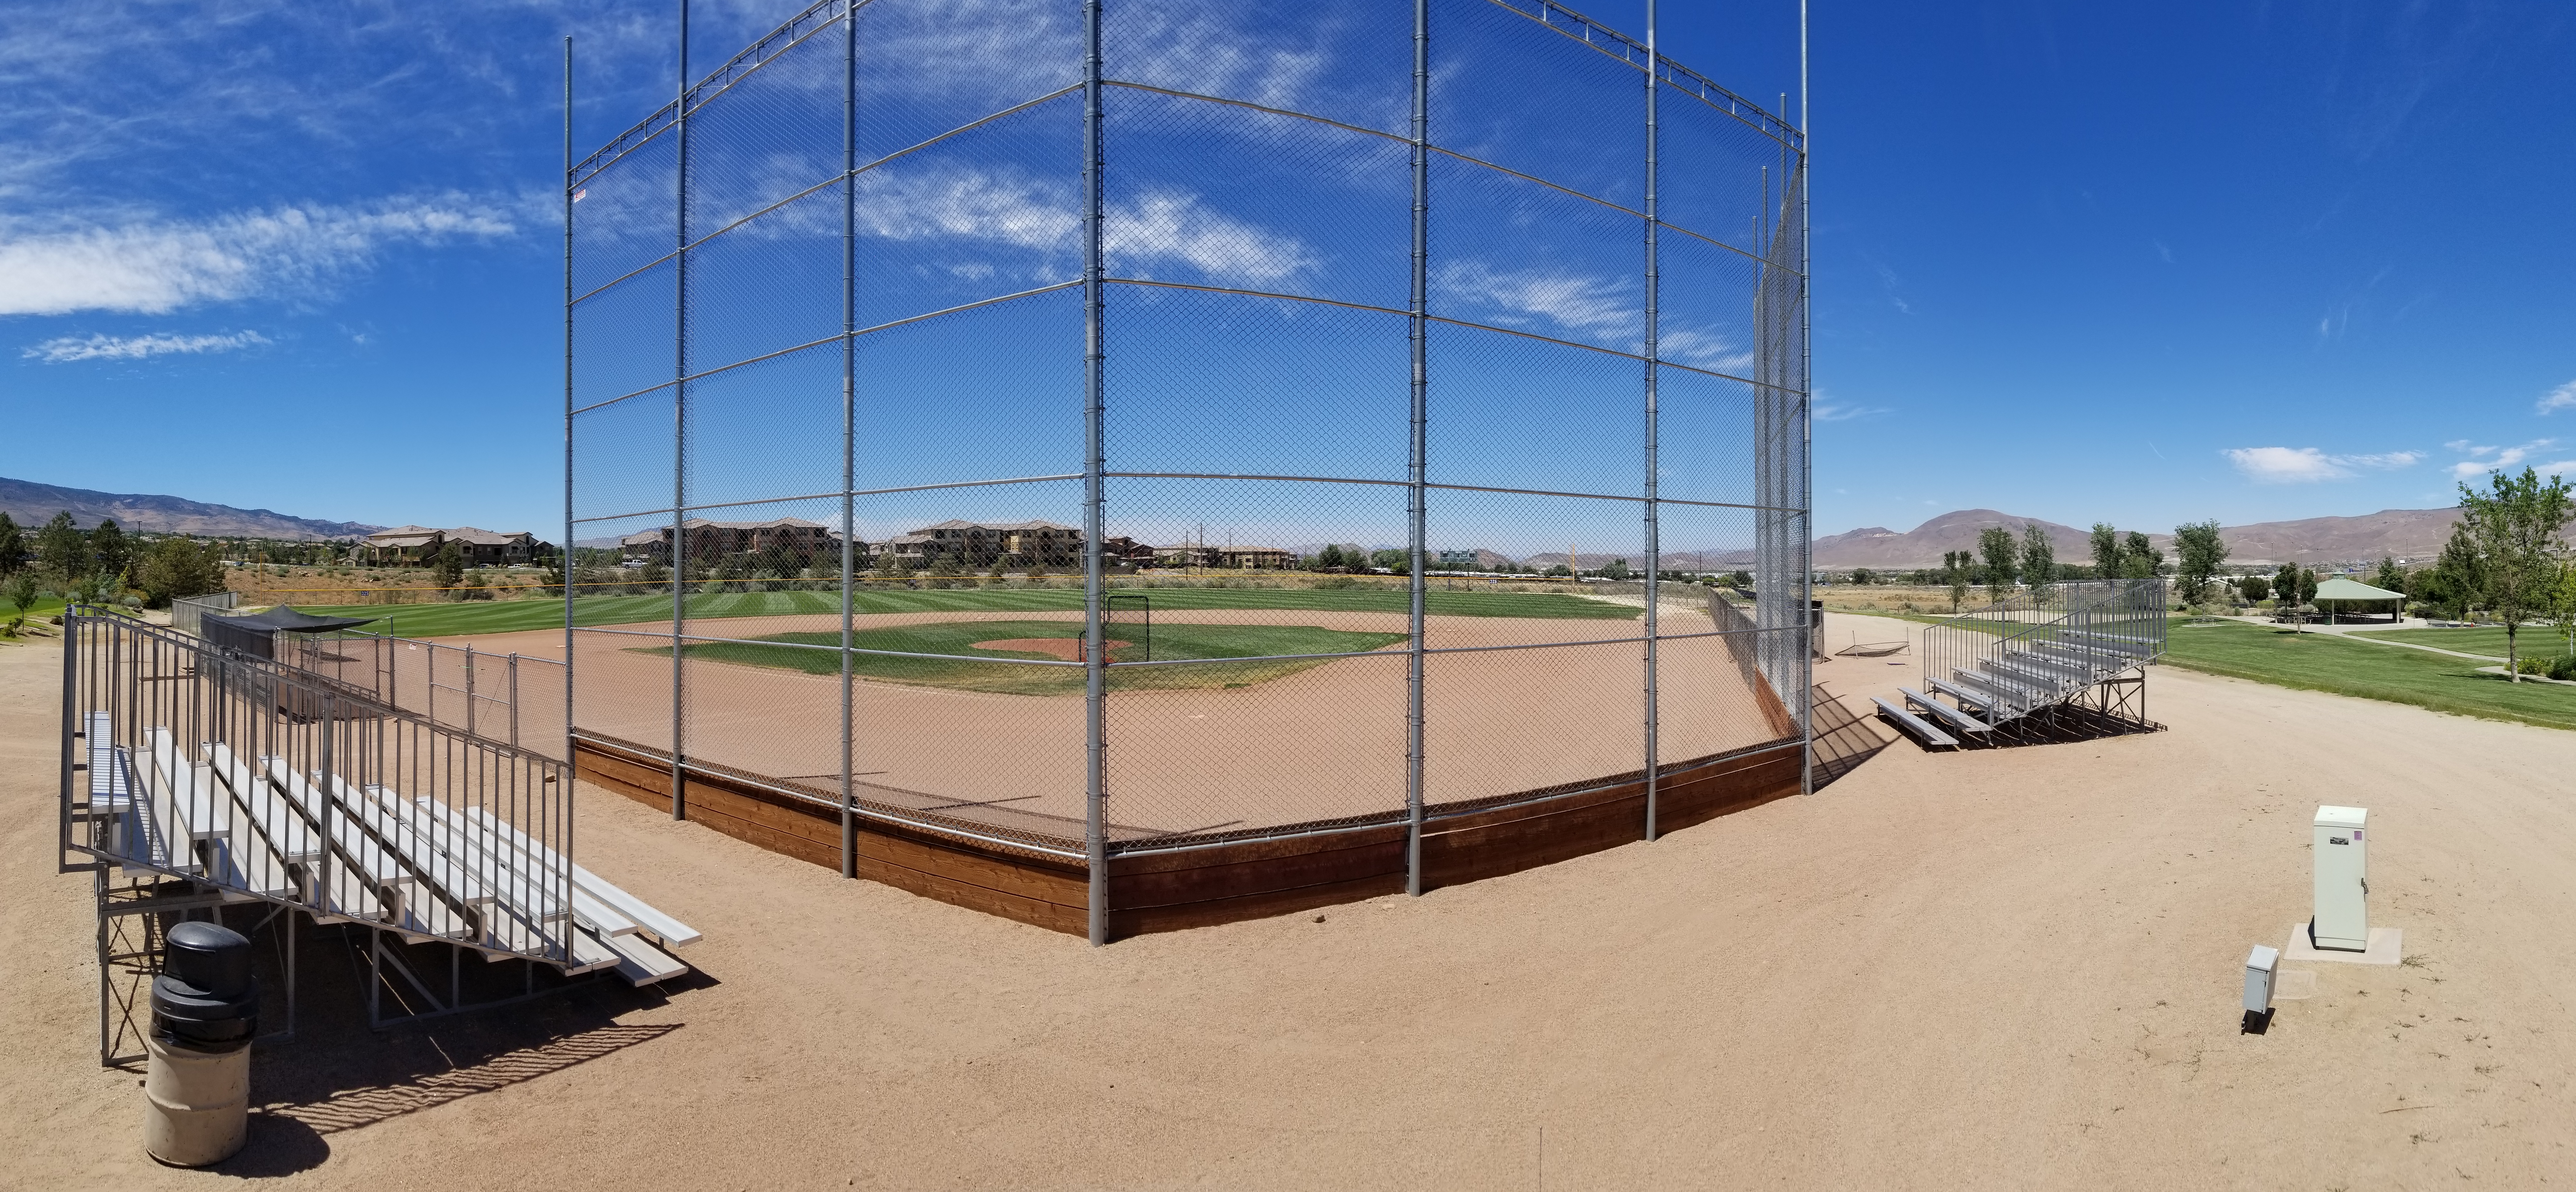 Regulation Baseball Field